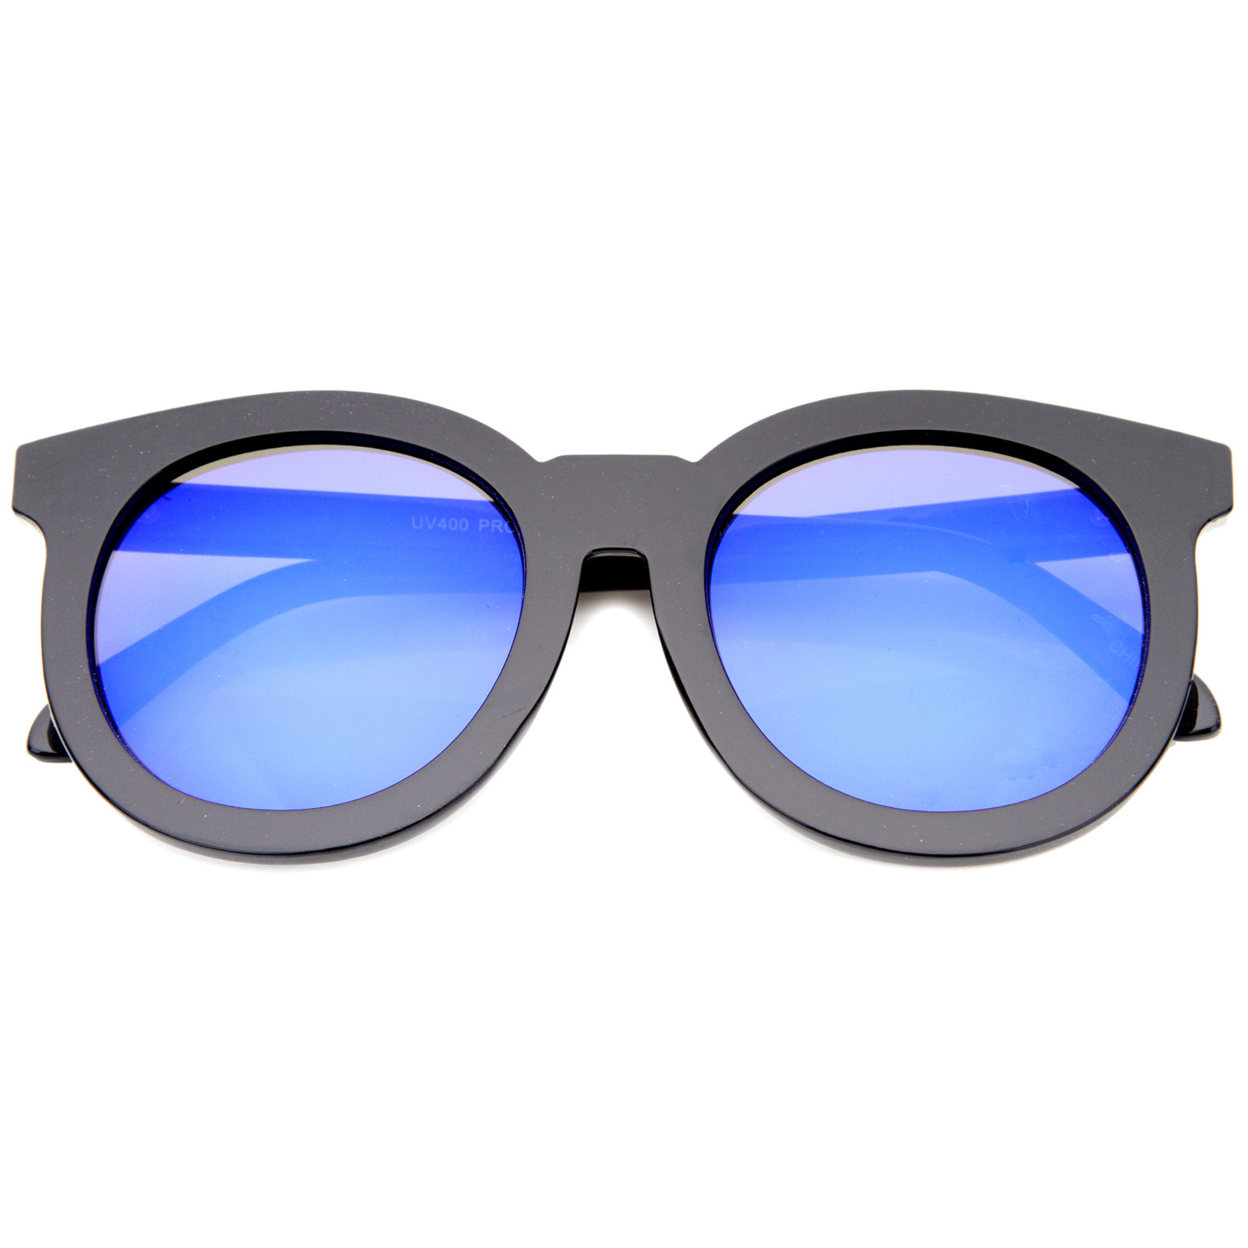 Women's Fashion Oversized Flash Mirrored Flat Lens Round Sunglasses 64mm - Shiny Black-Silver / Blue Mirror